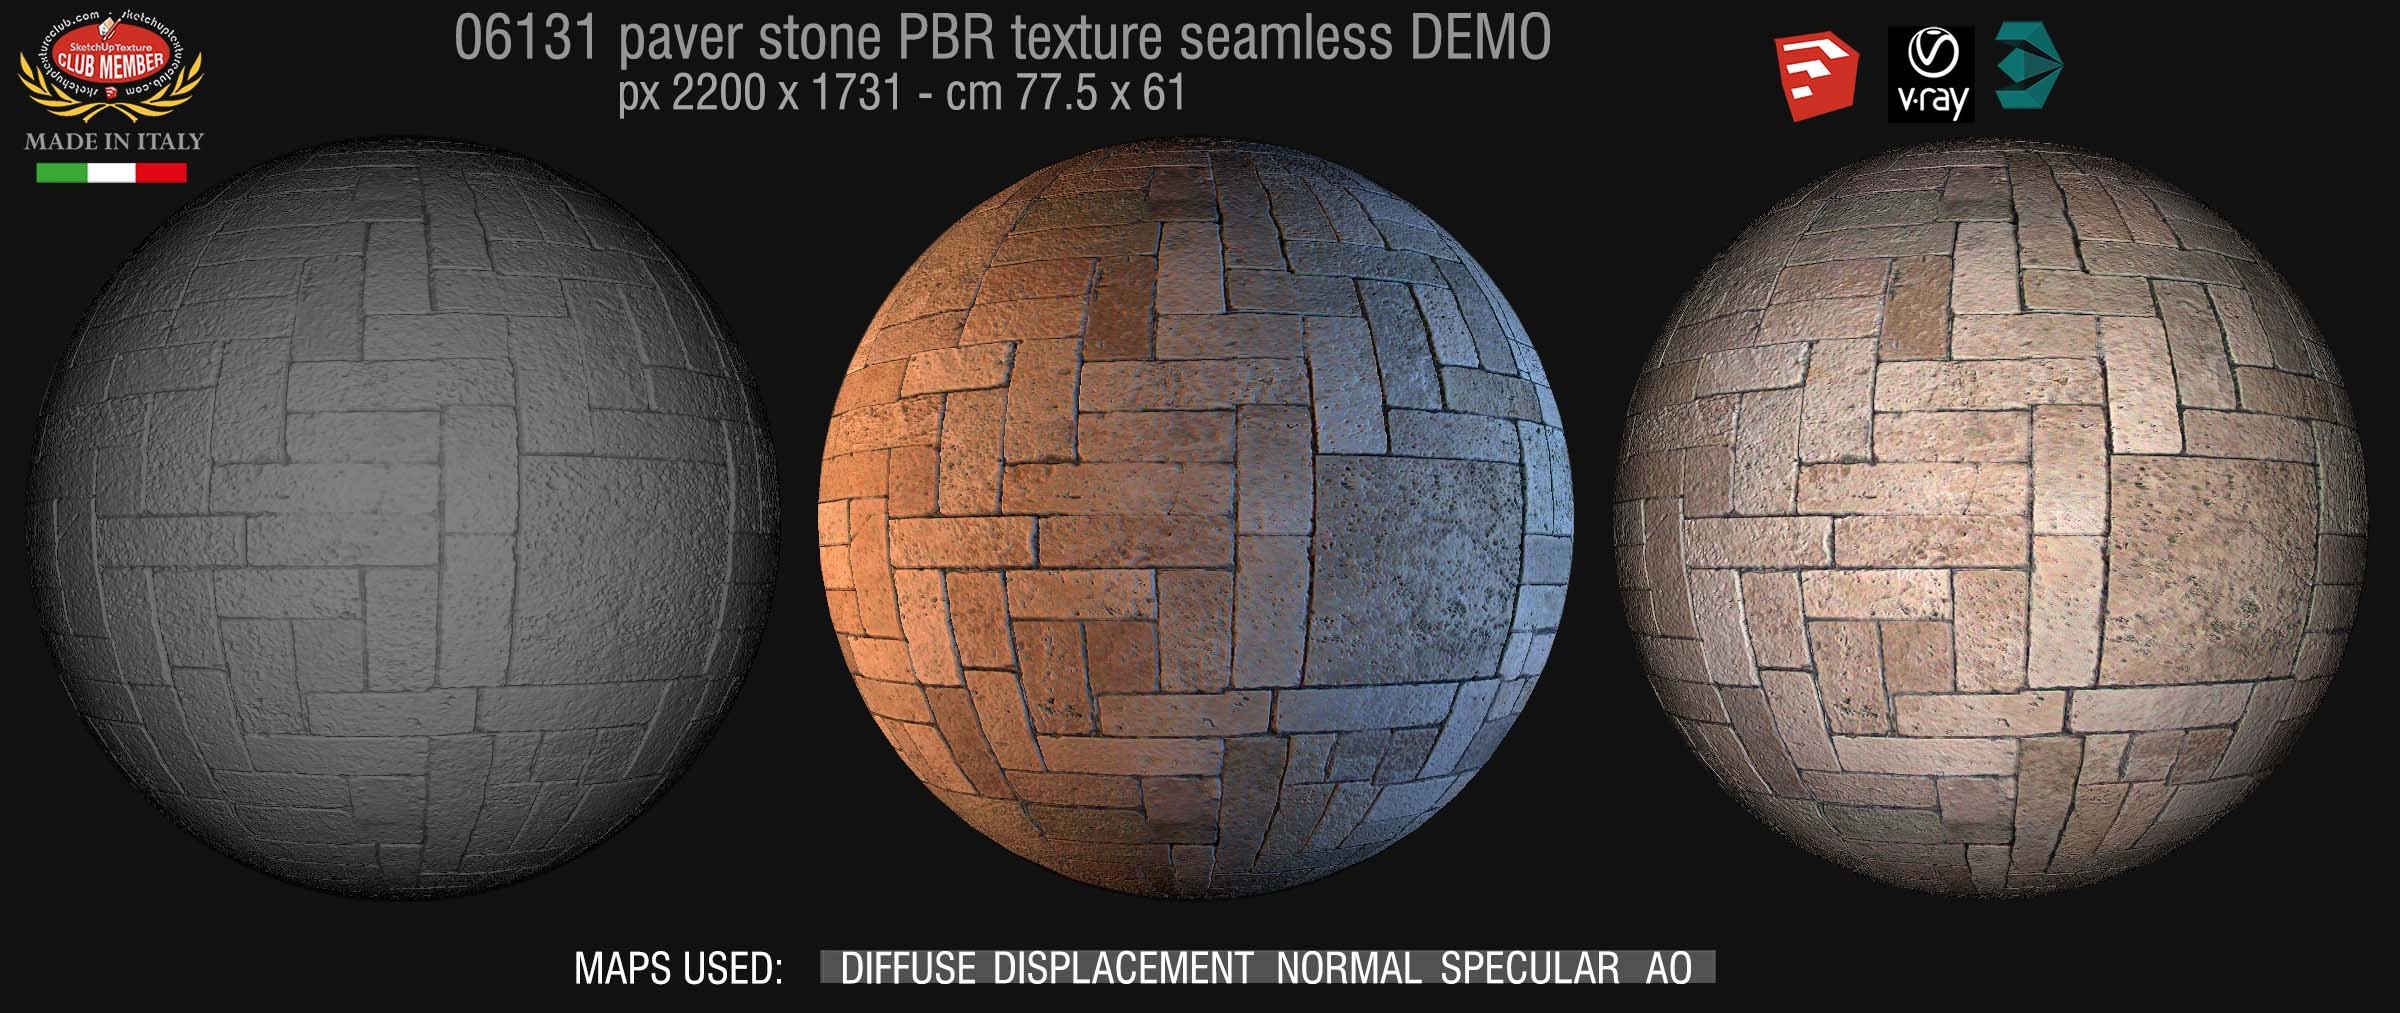 06131 paver stone PBR texture seamless DEMO